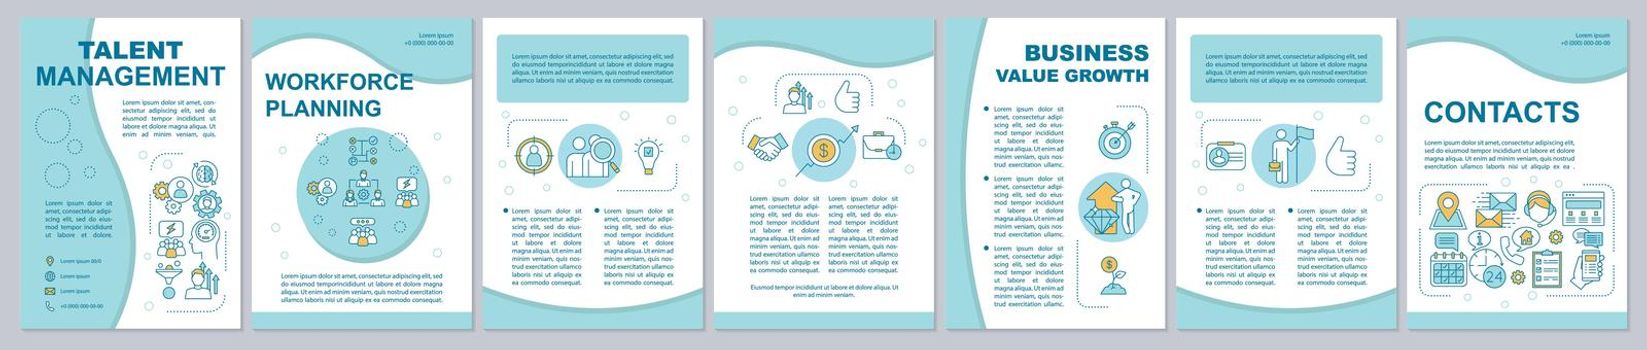 Talent management brochure template layout